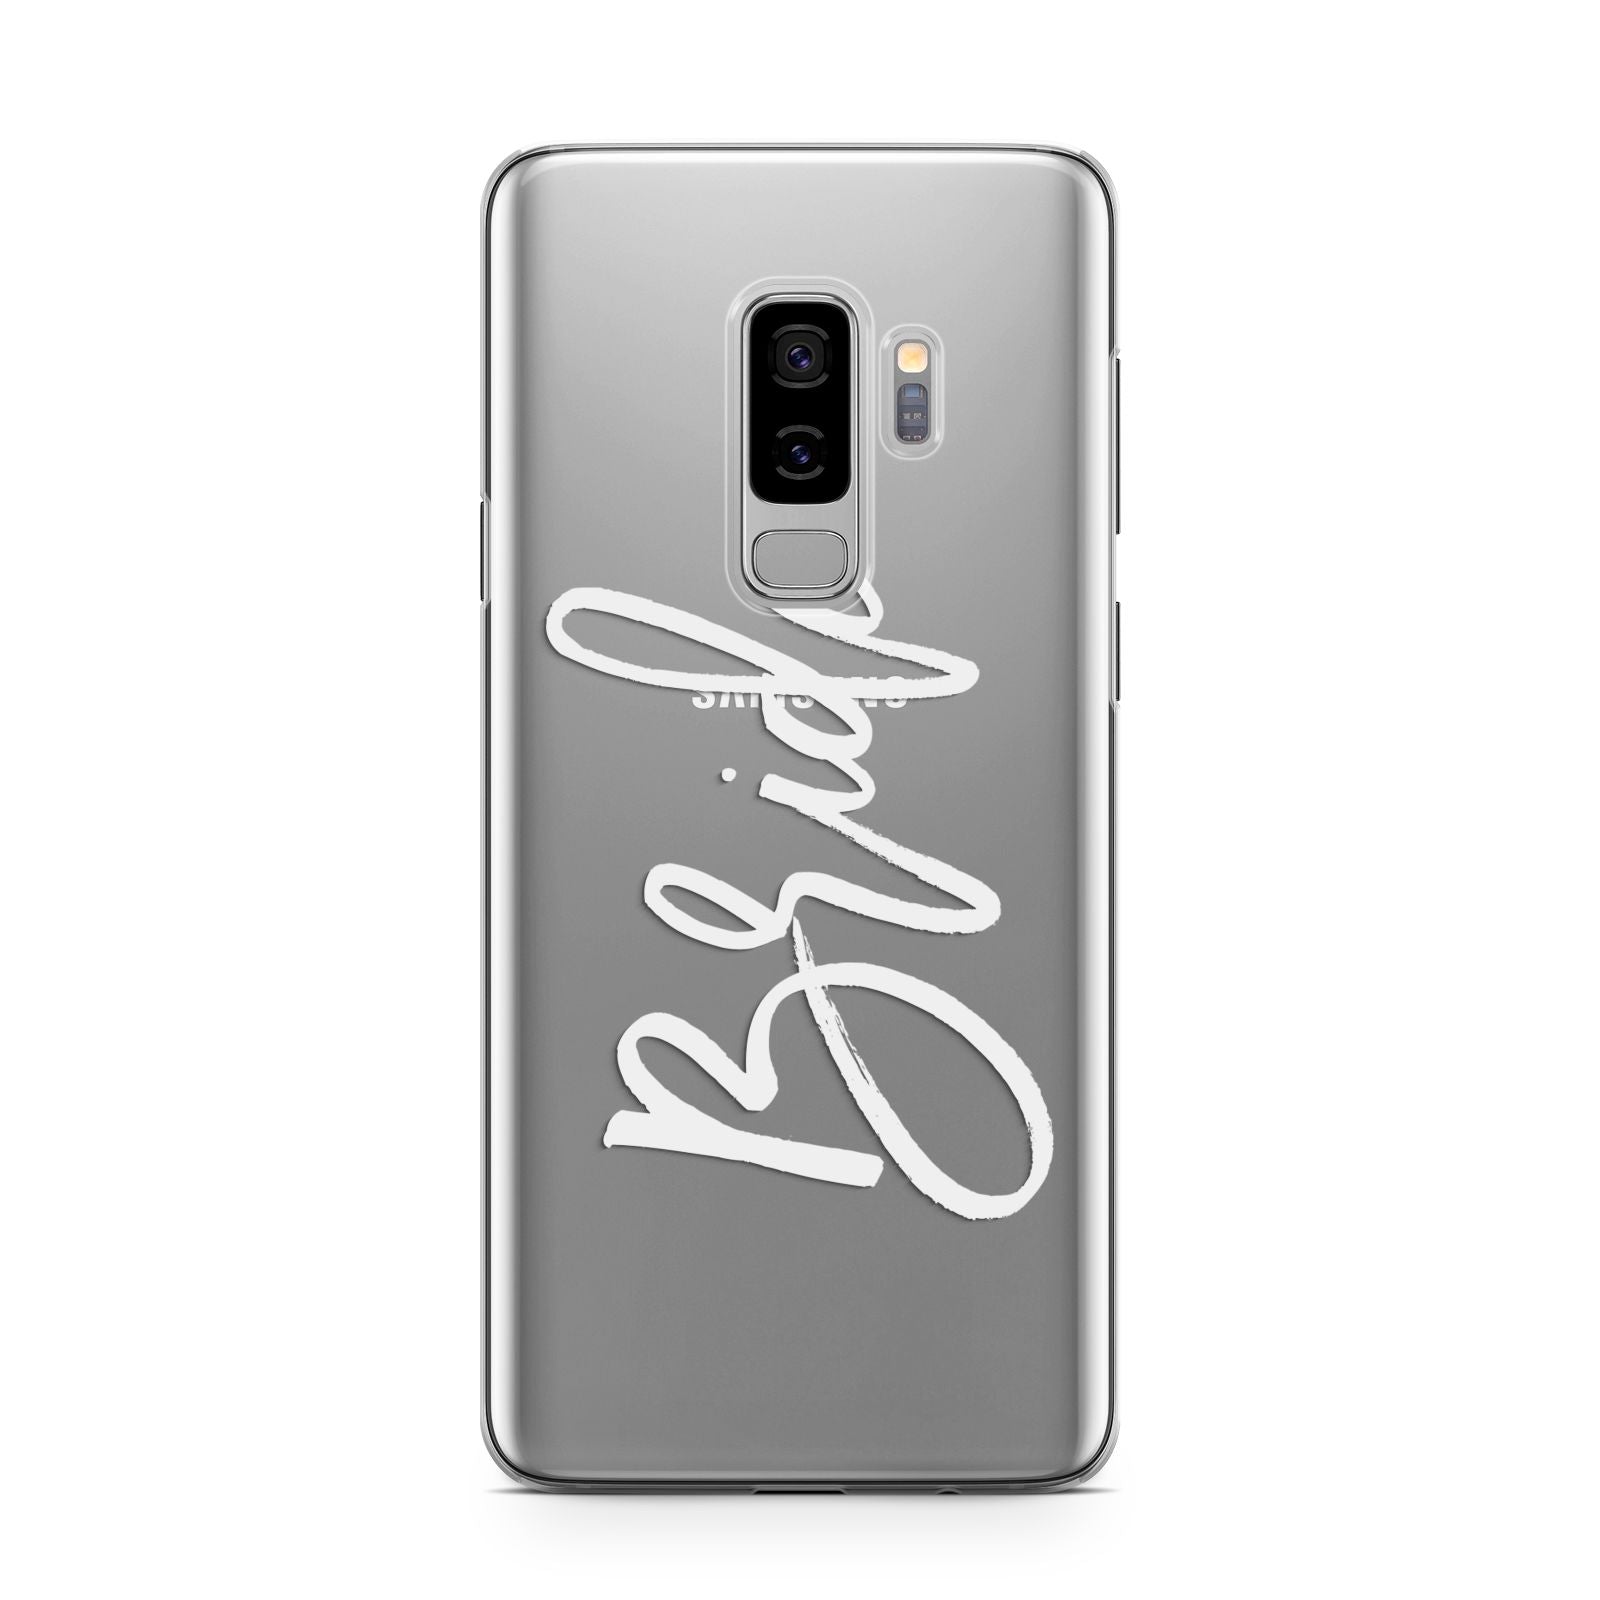 Bride Transparent Samsung Galaxy S9 Plus Case on Silver phone